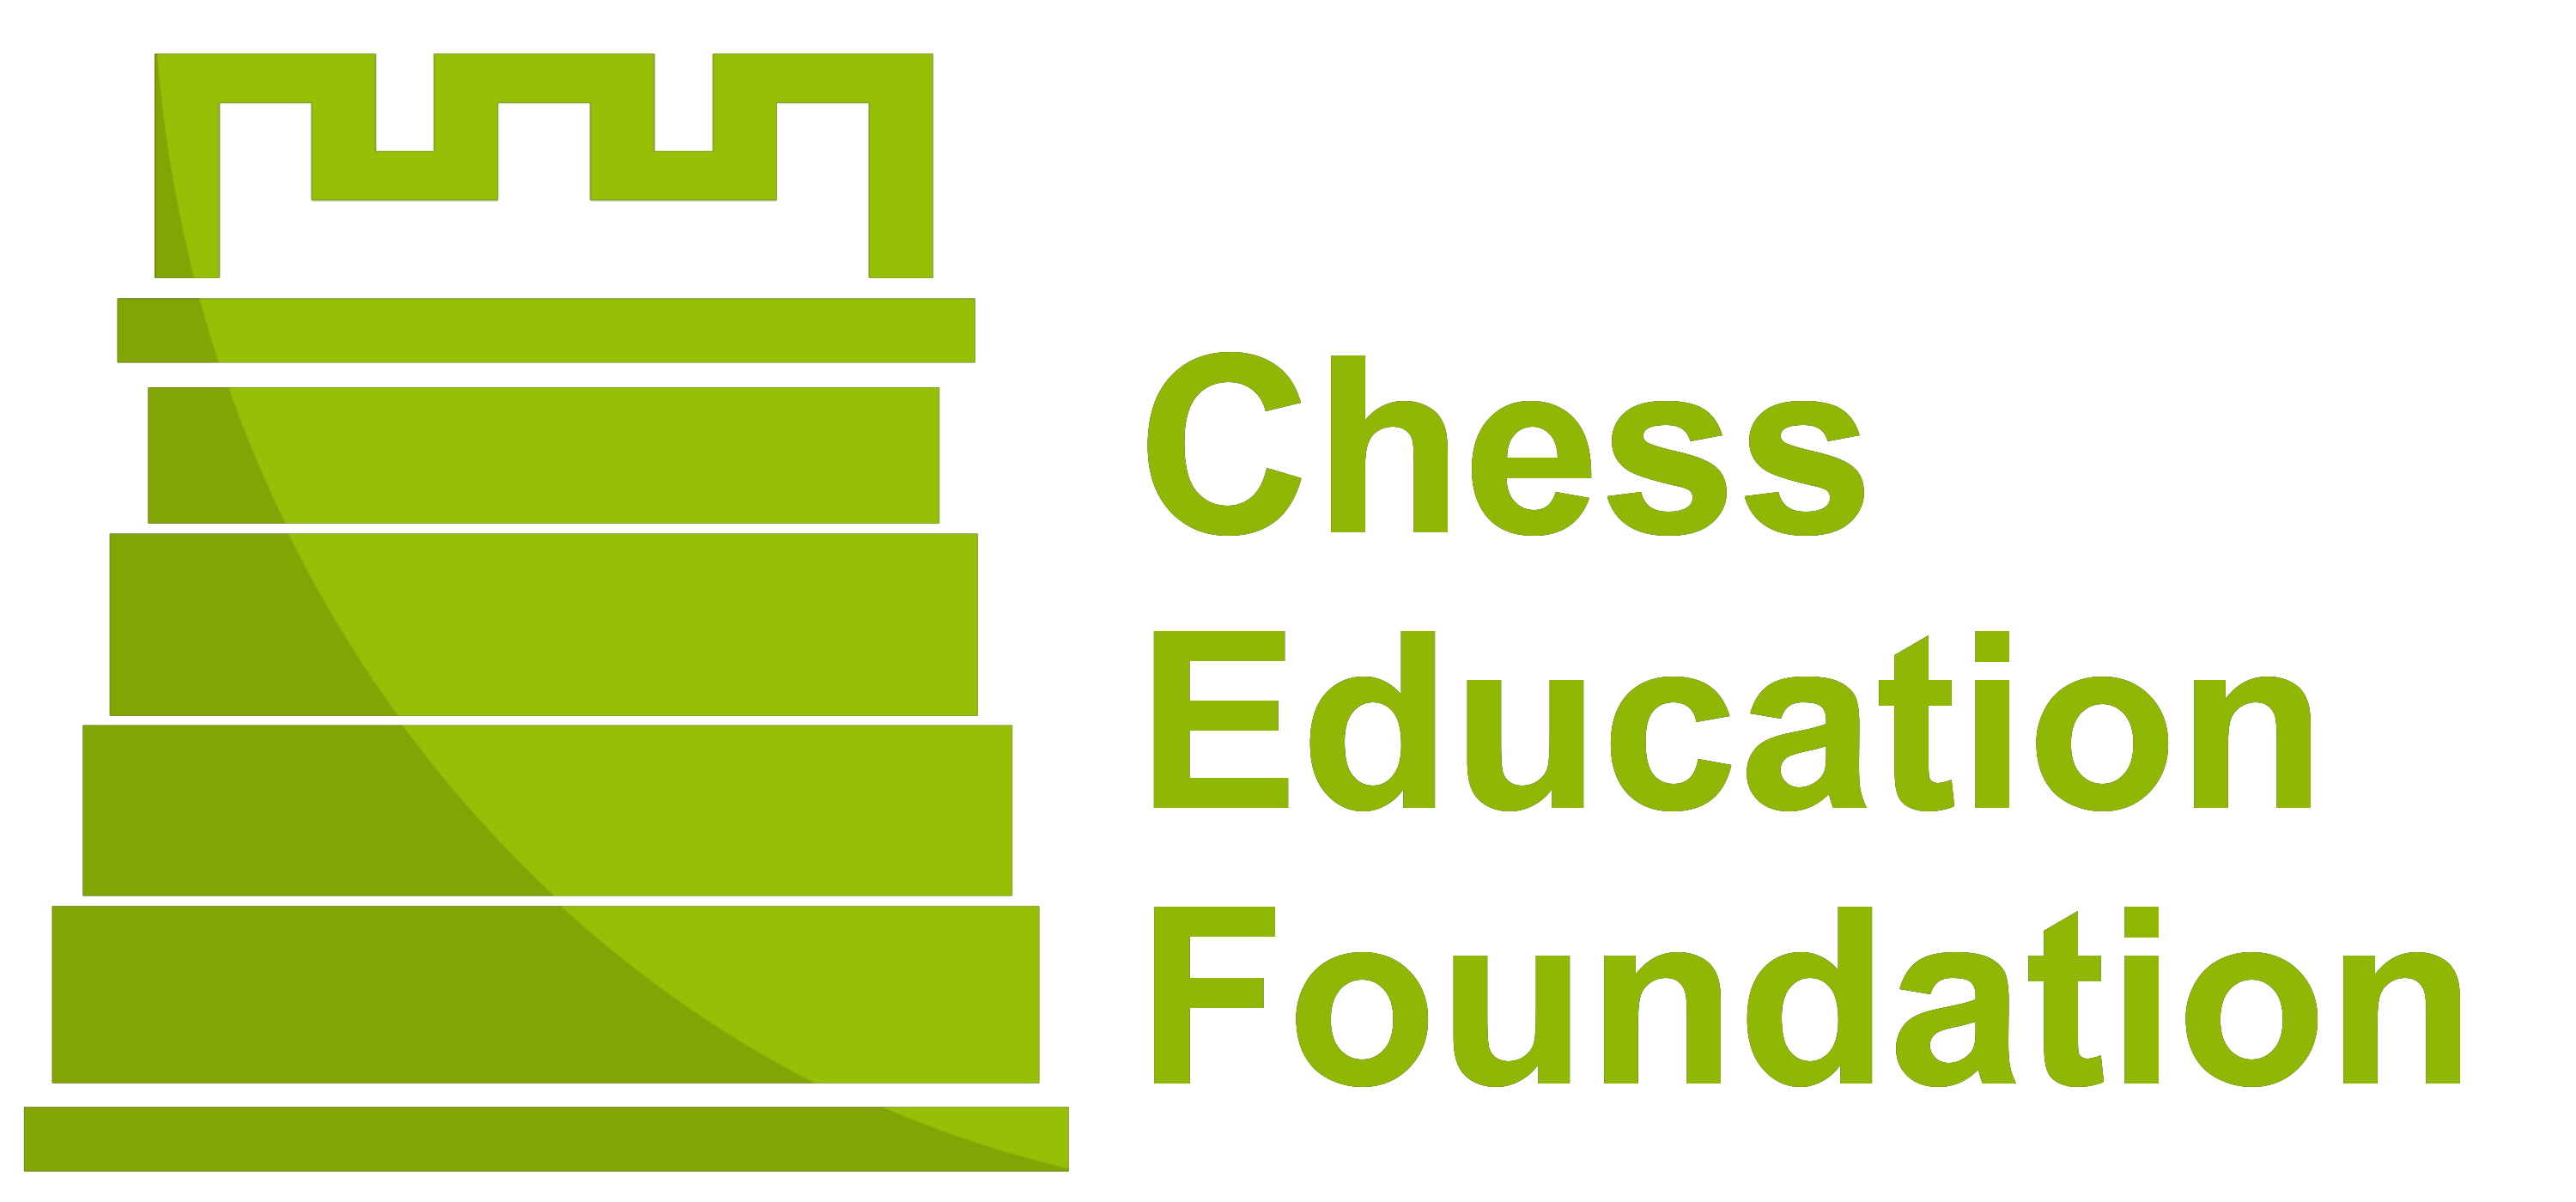 Chess Education Foundation